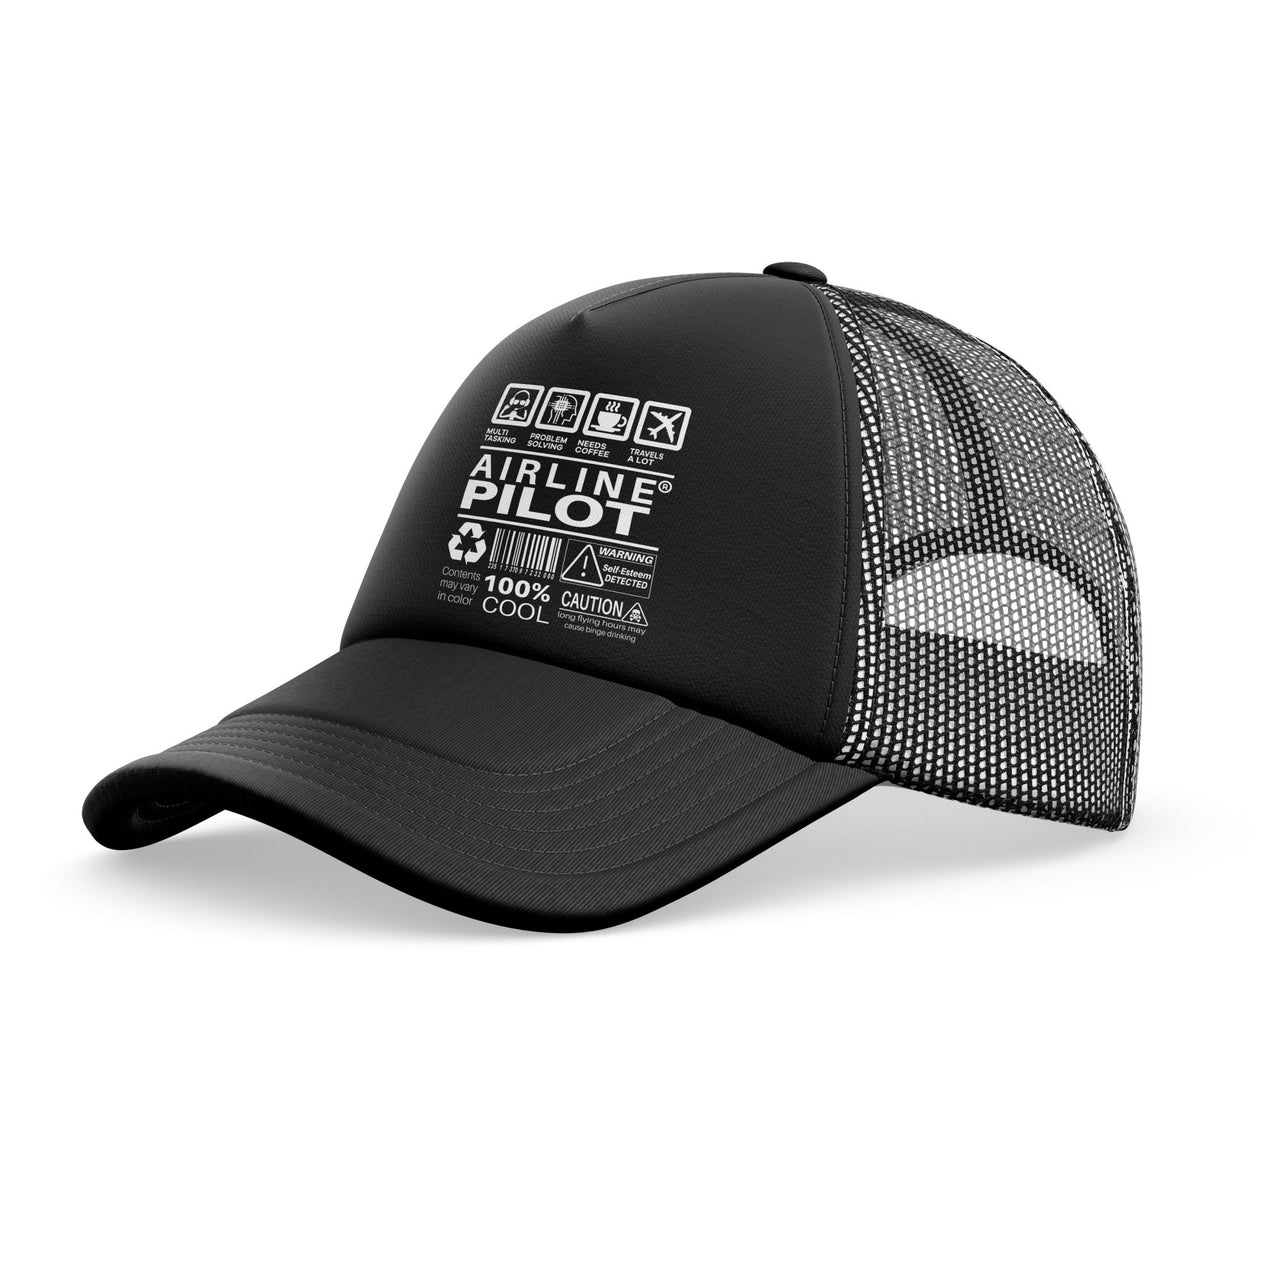 Airline Pilot Label Designed Trucker Caps & Hats